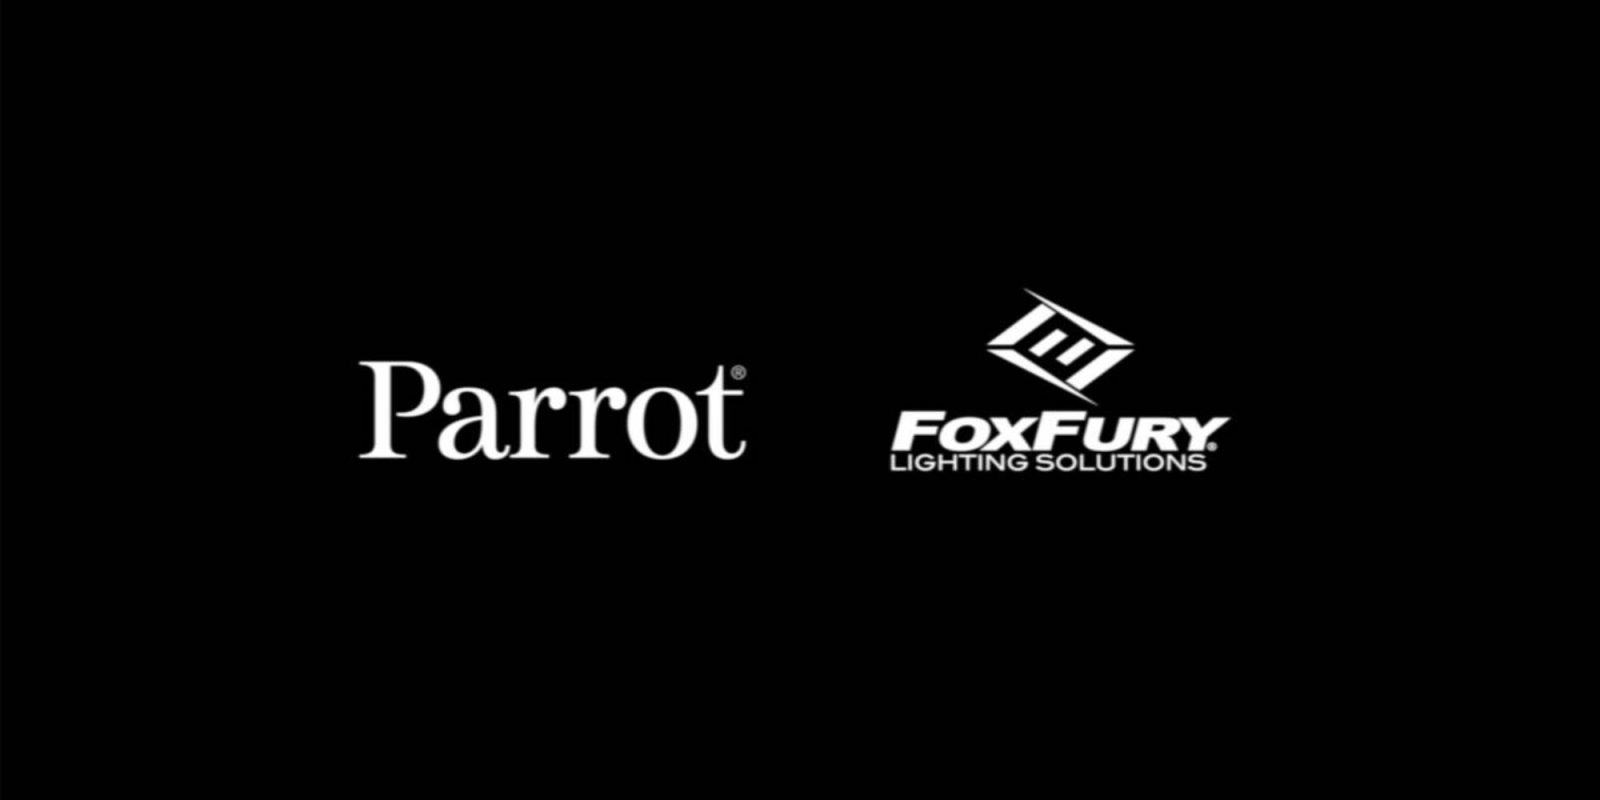 Parrot FoxFury drones lights